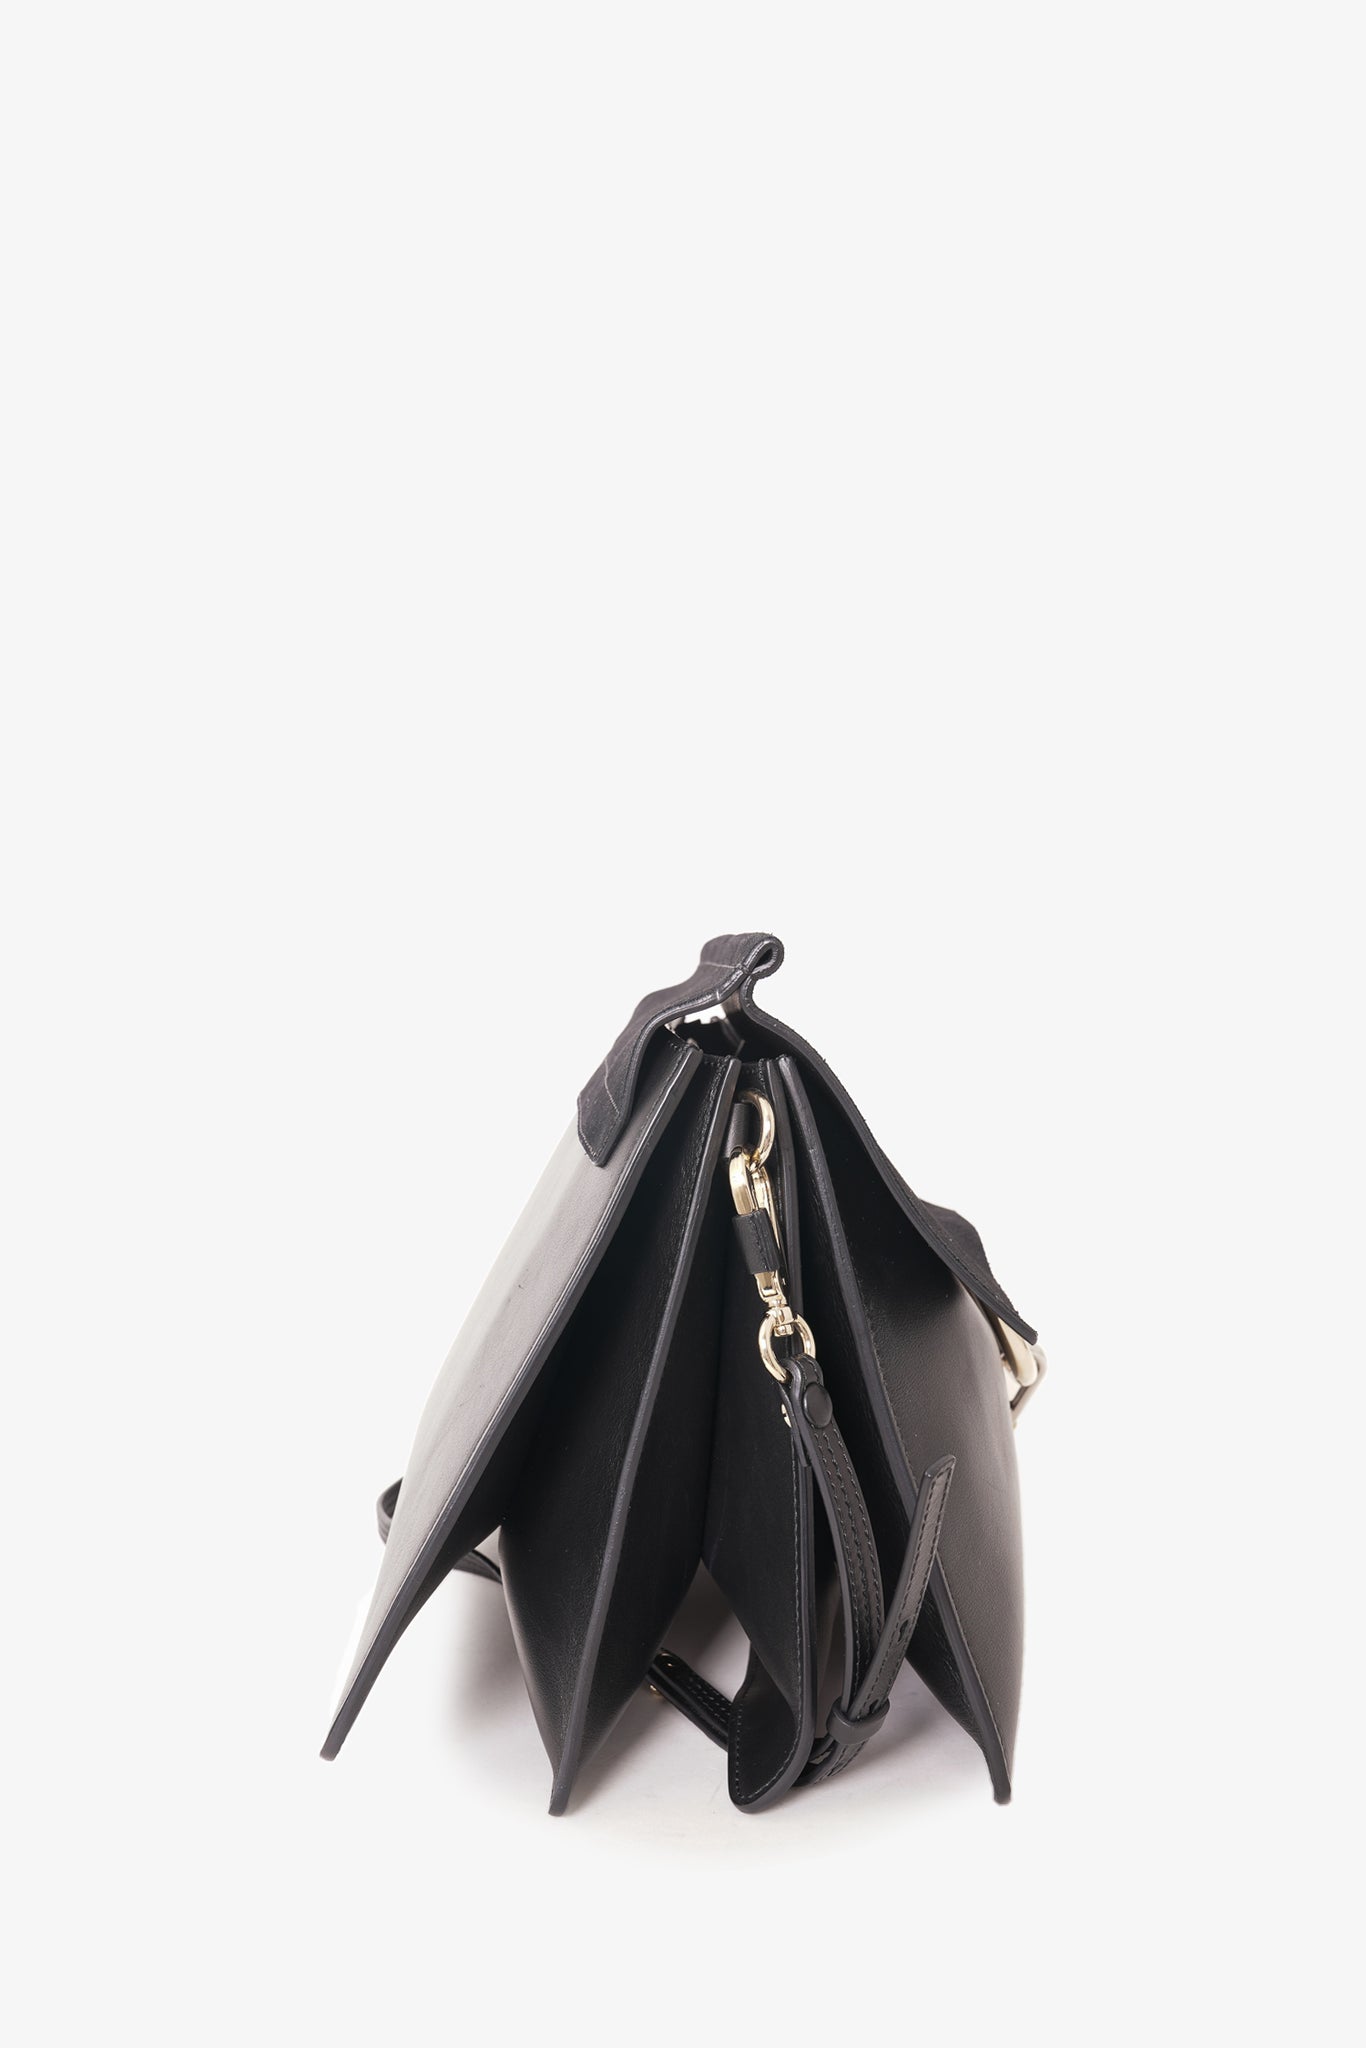 Chloe Black Leather/Suede Medium Faye Shoulder Bag